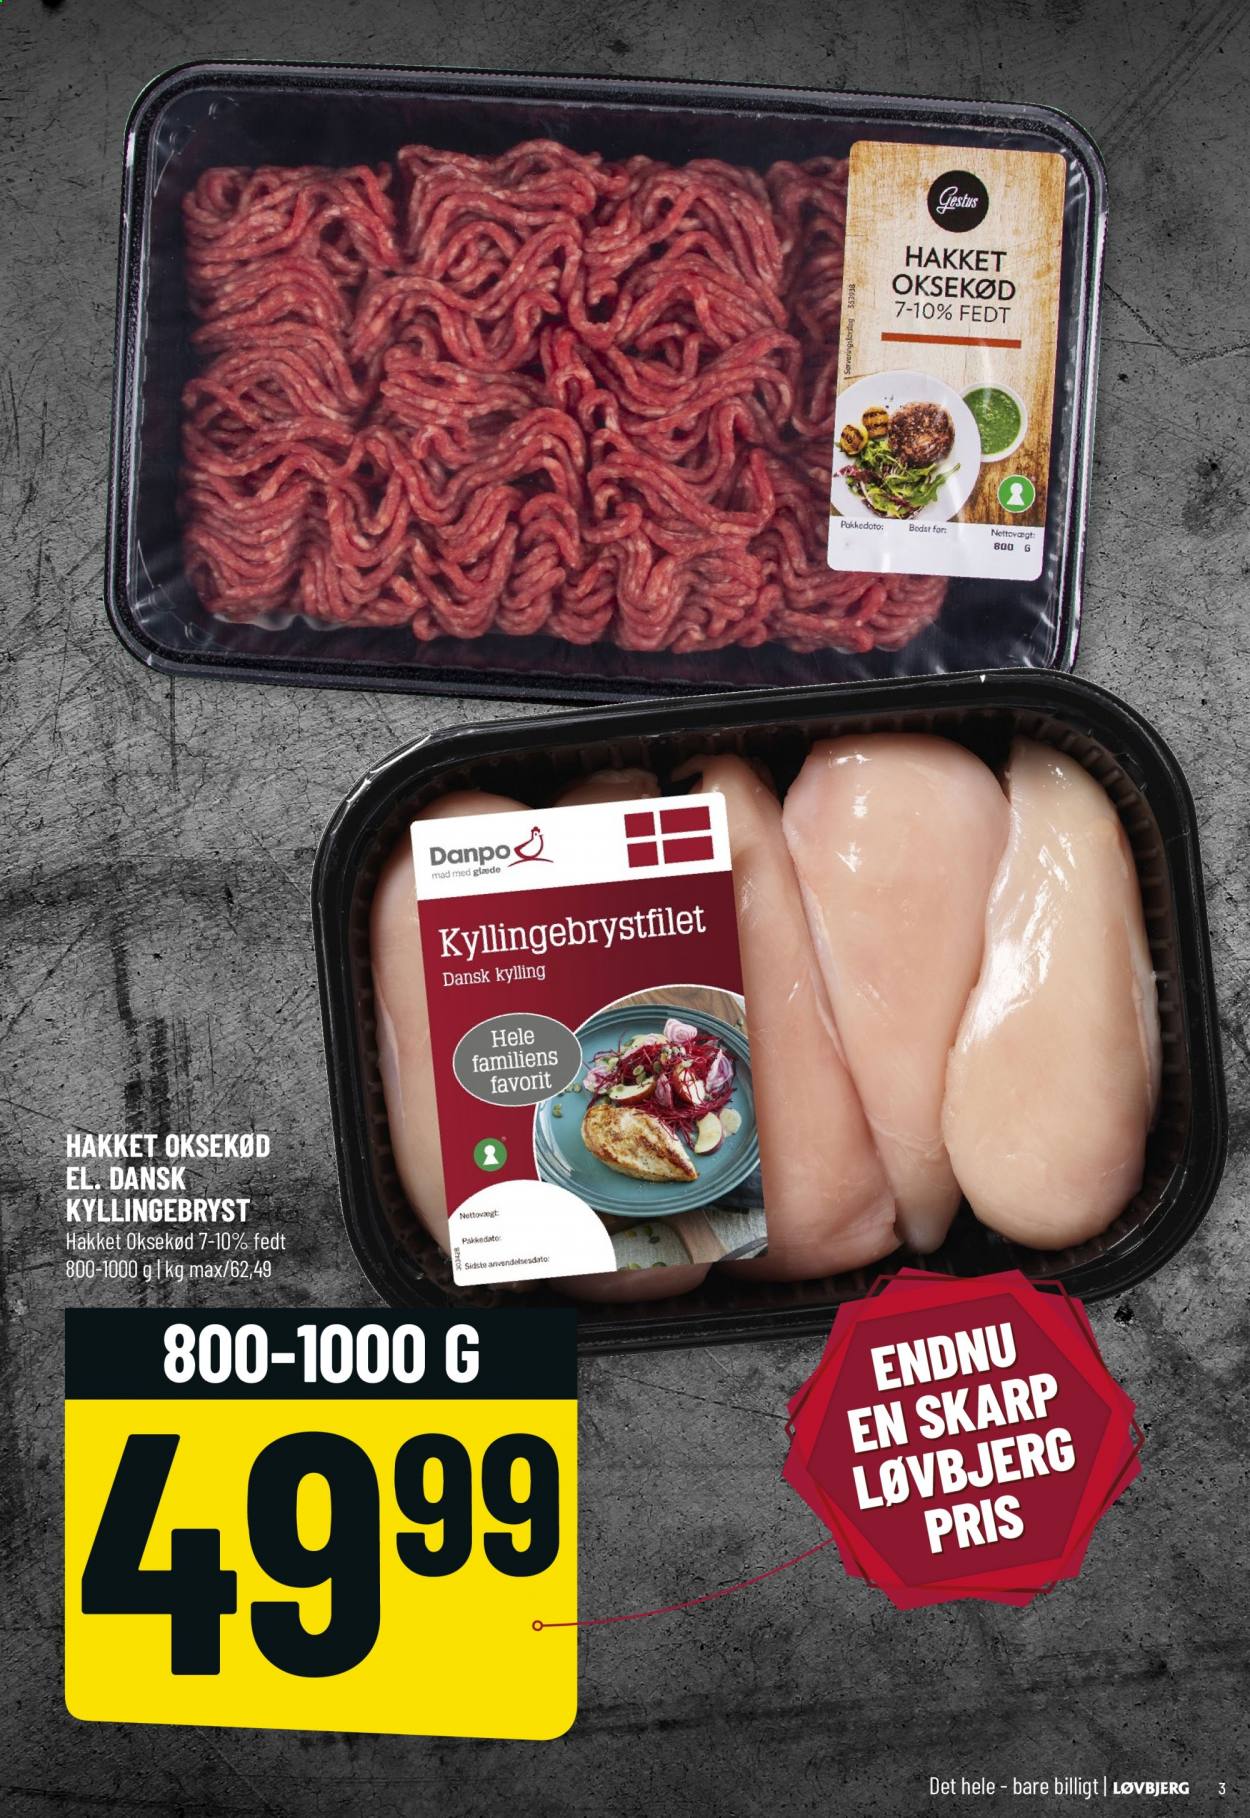 thumbnail - Løvbjerg tilbud  - 1.5.2021 - 6.5.2021 - tilbudsprodukter - hakket oksekød, kylling, kyllingebrystfilet. Side 3.